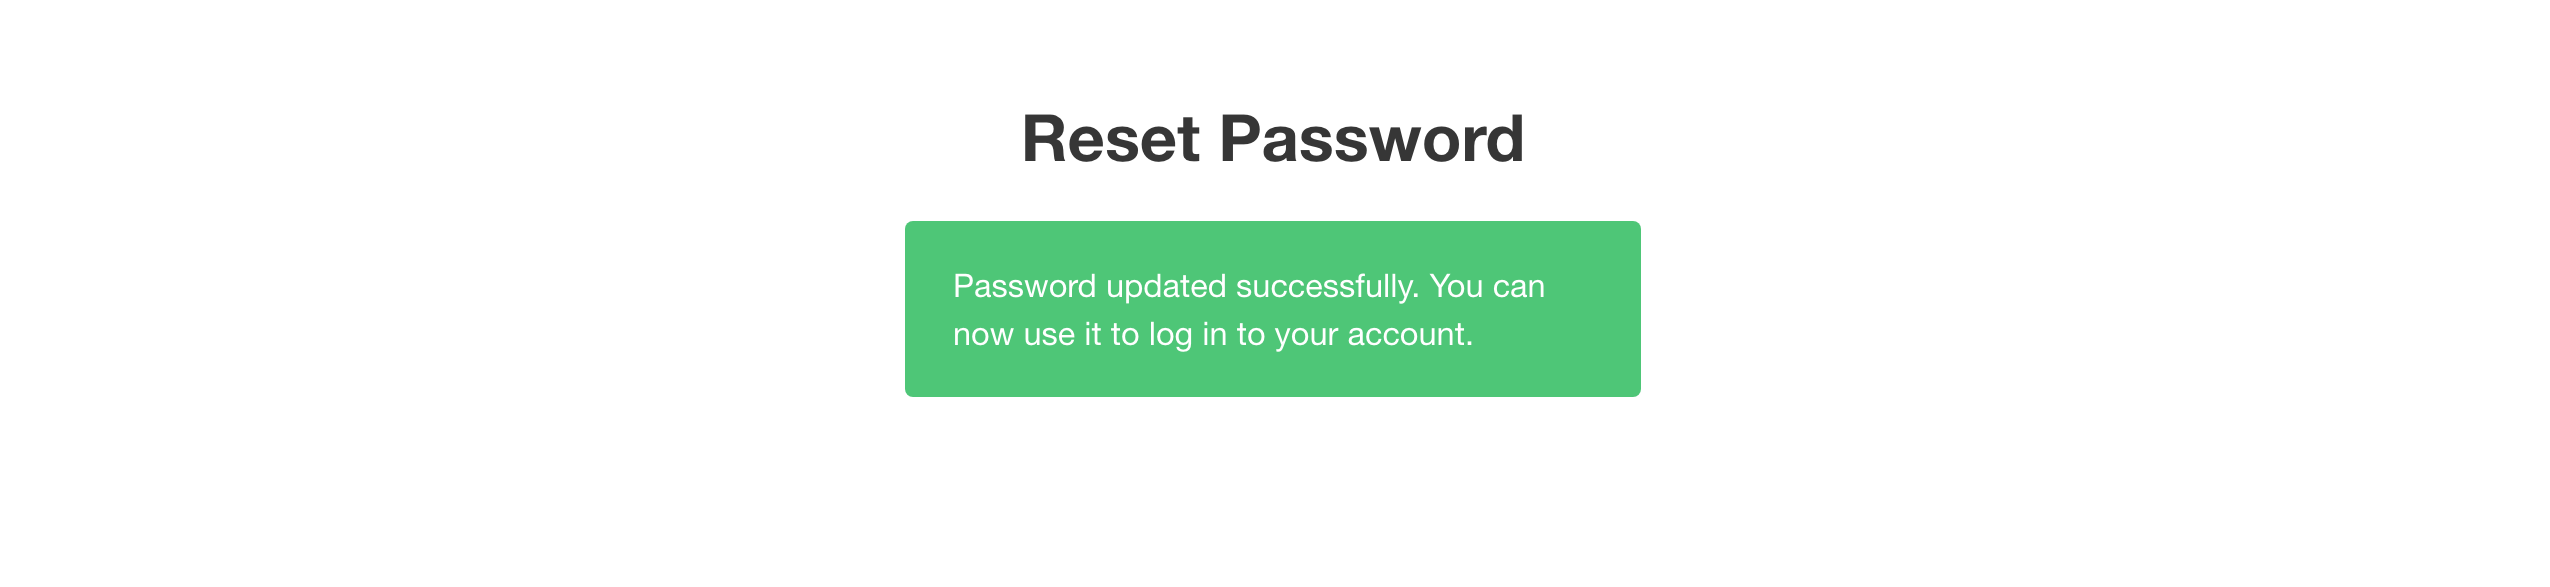 Strapi Reset Password Success